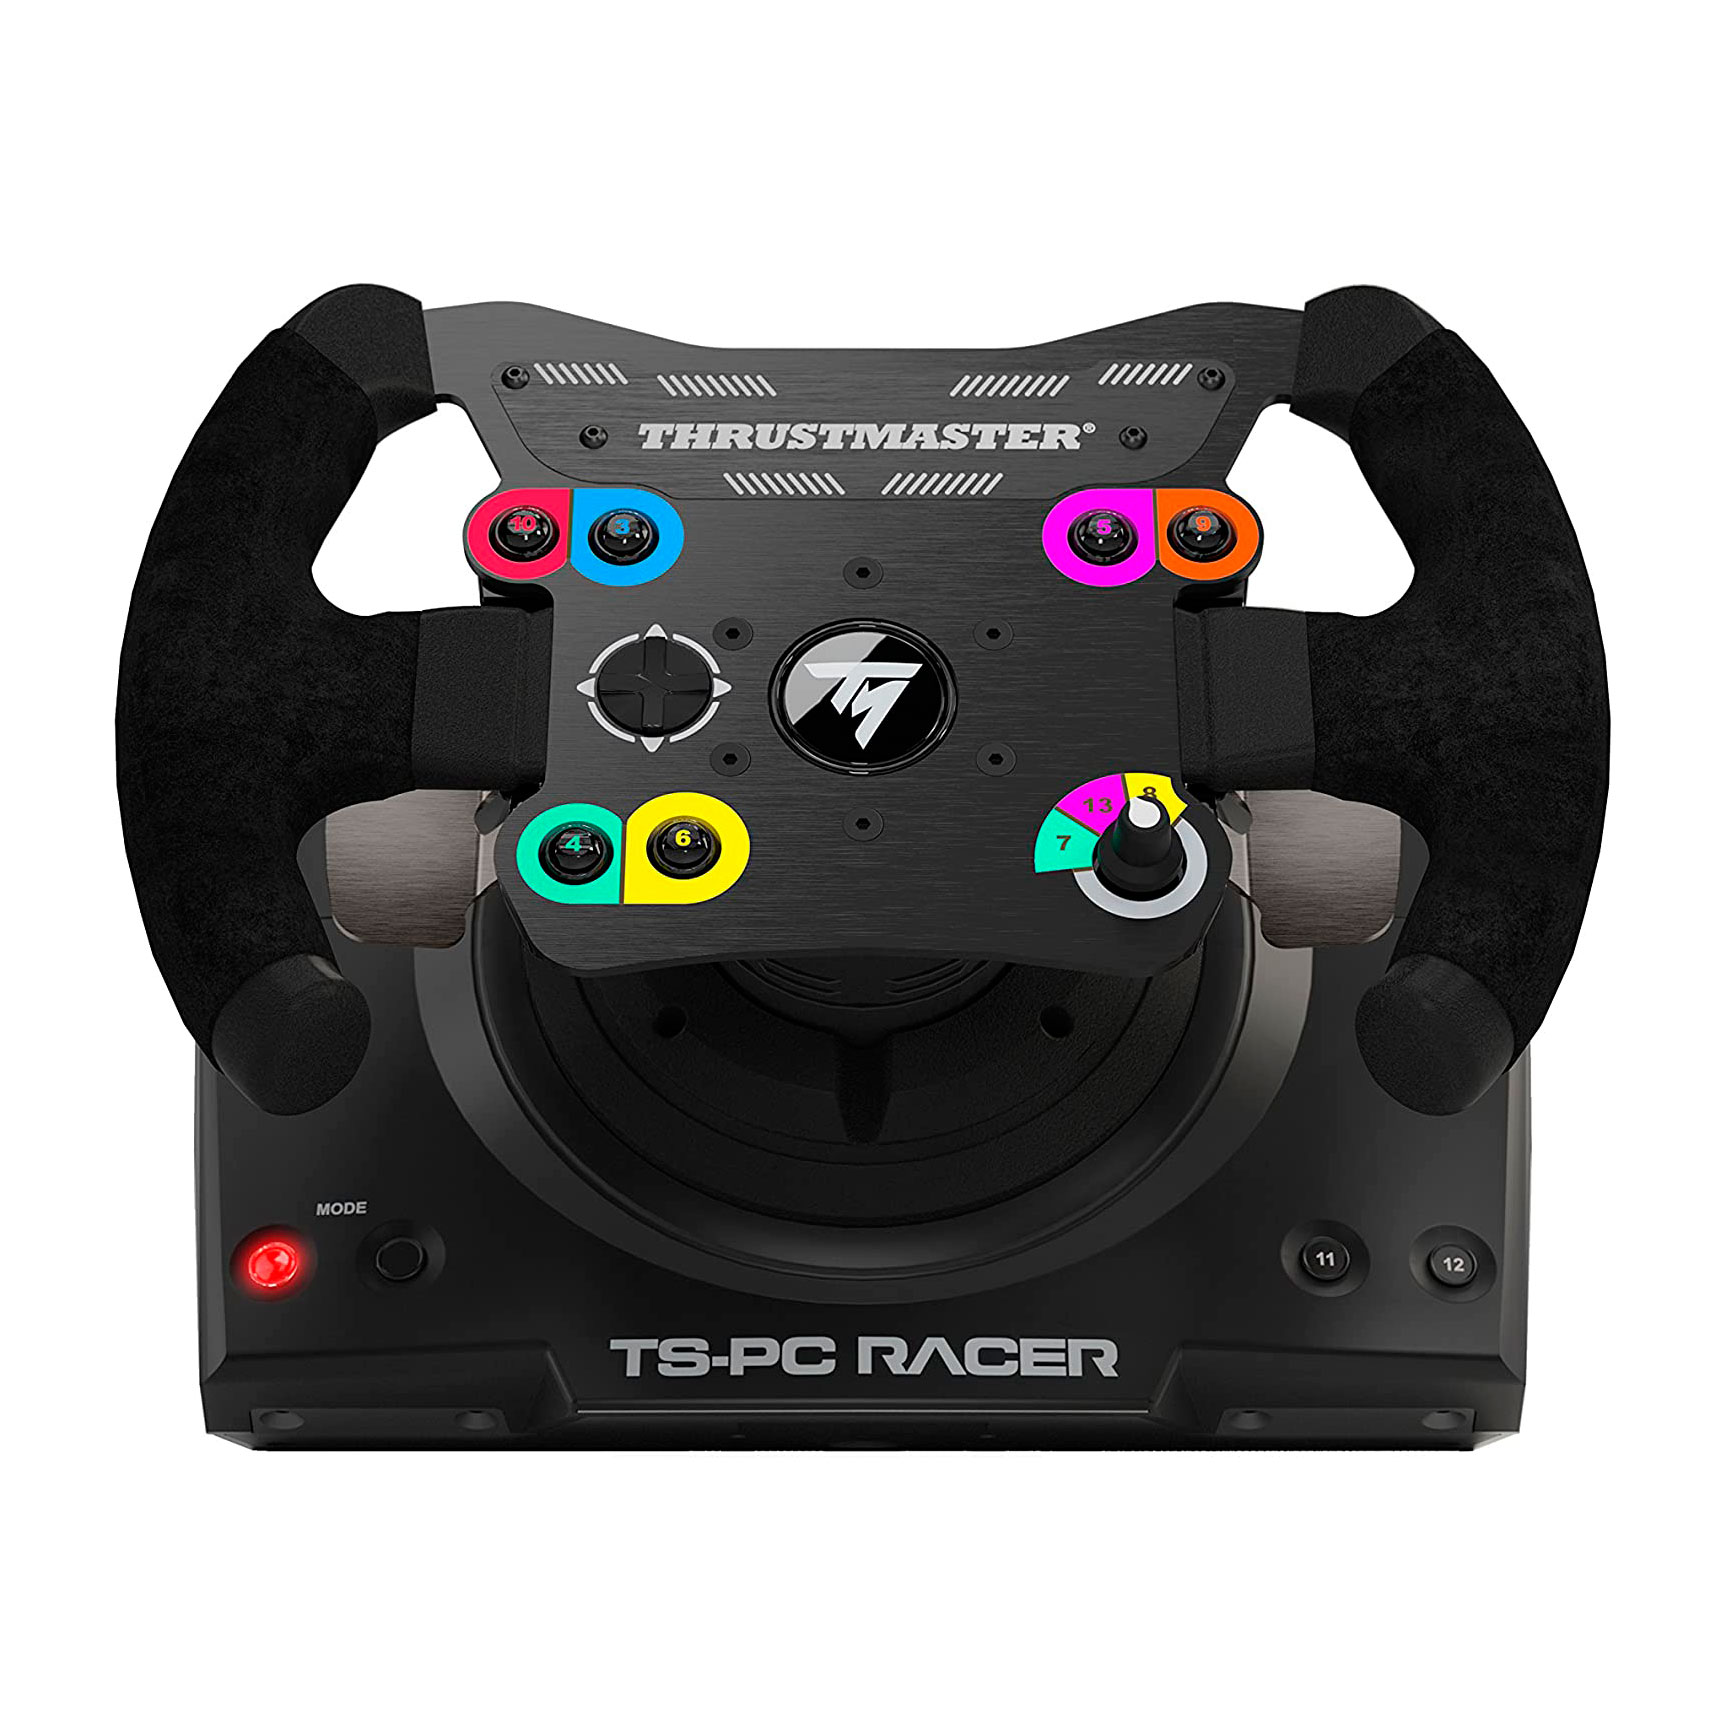 Руль Thrustmaster TS-PC Racer, черный руль thrustmaster t300 rs gt edition tm 4160681